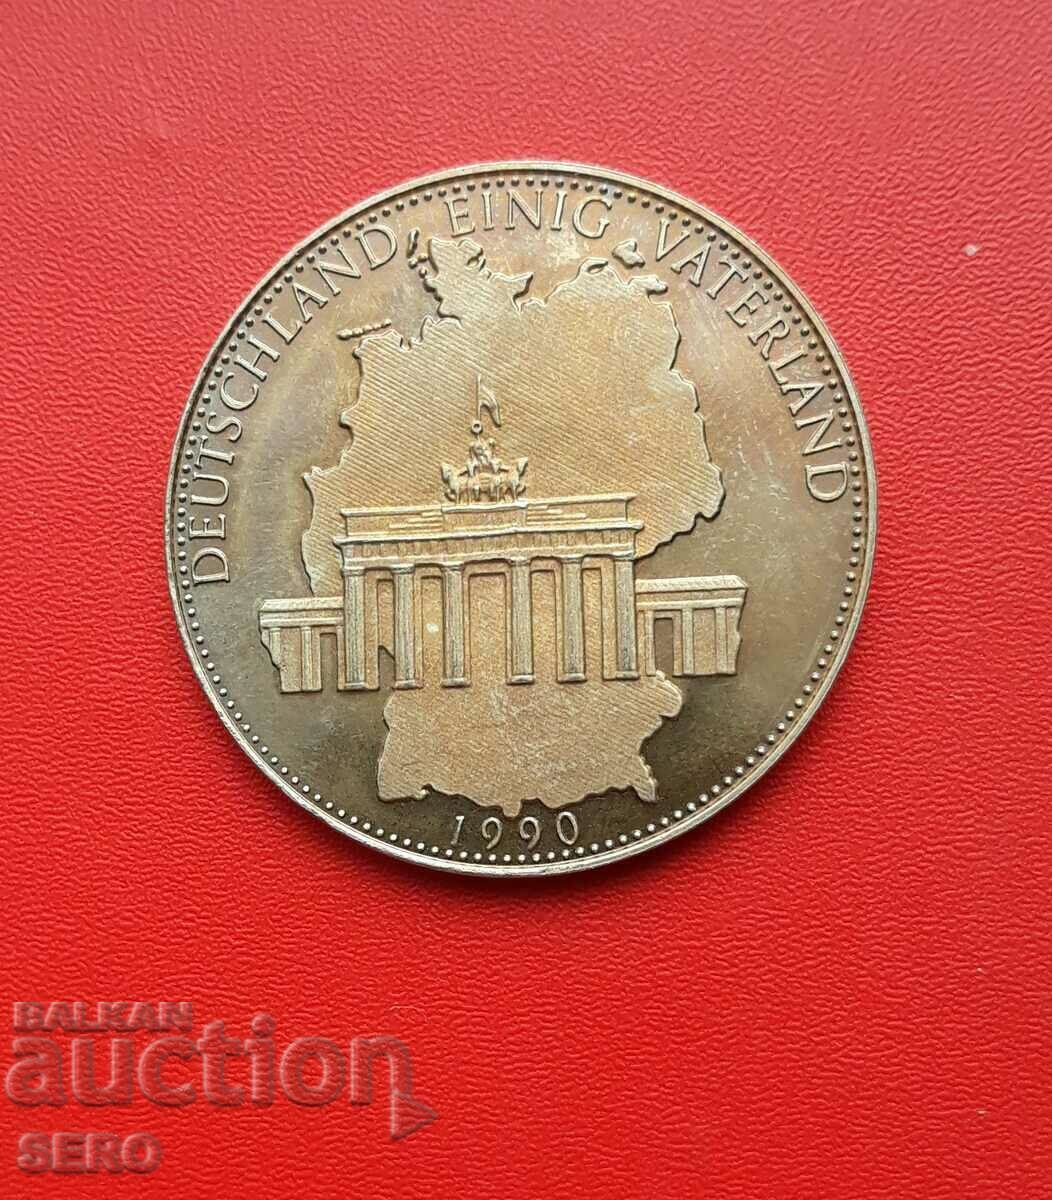 Germany-Medal 1990-United Germany